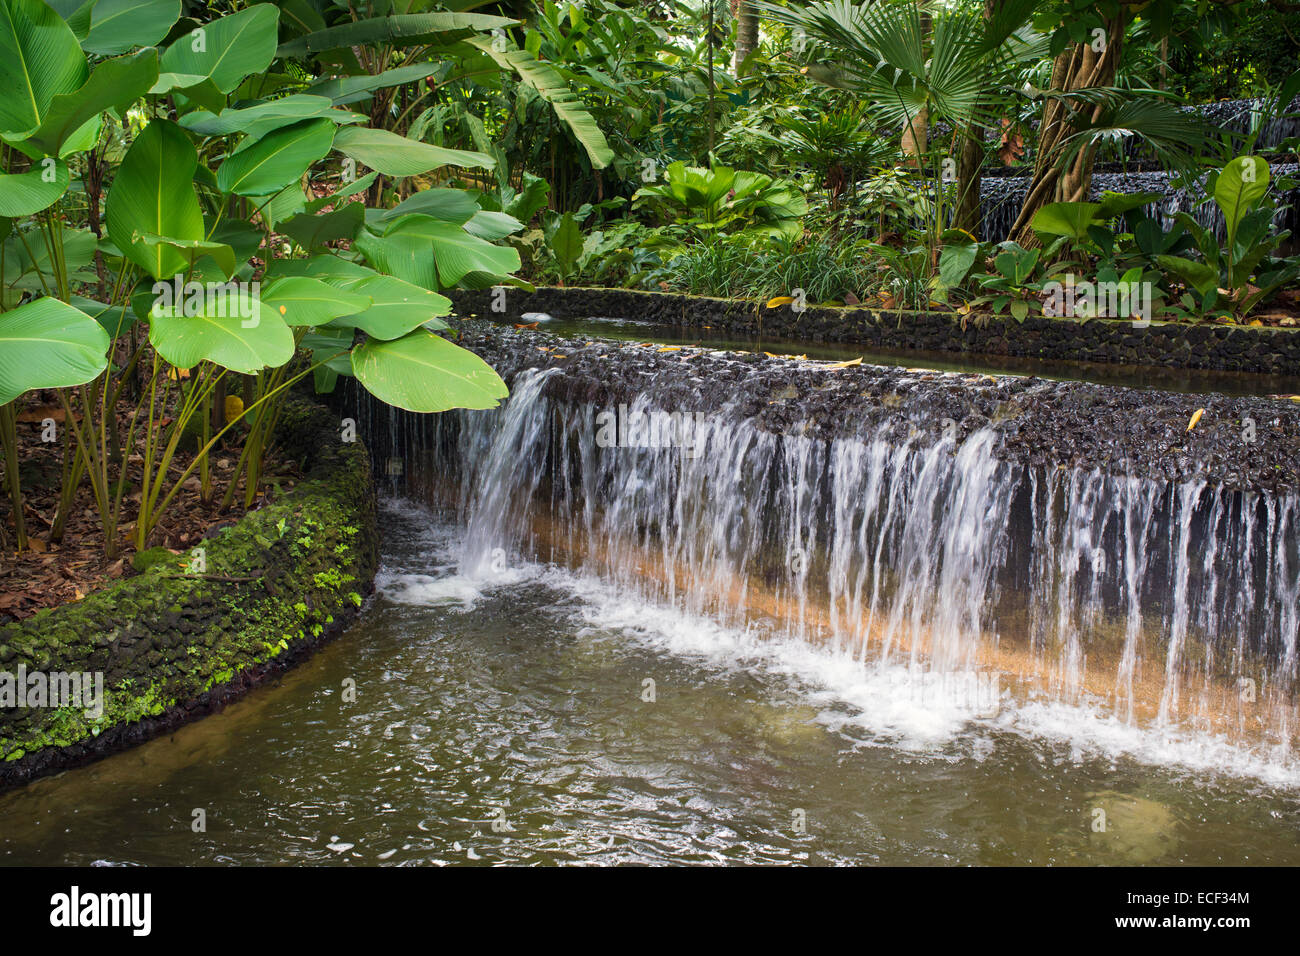 artificial water cascade and green plants in Singapore Botanical garden Stock Photo